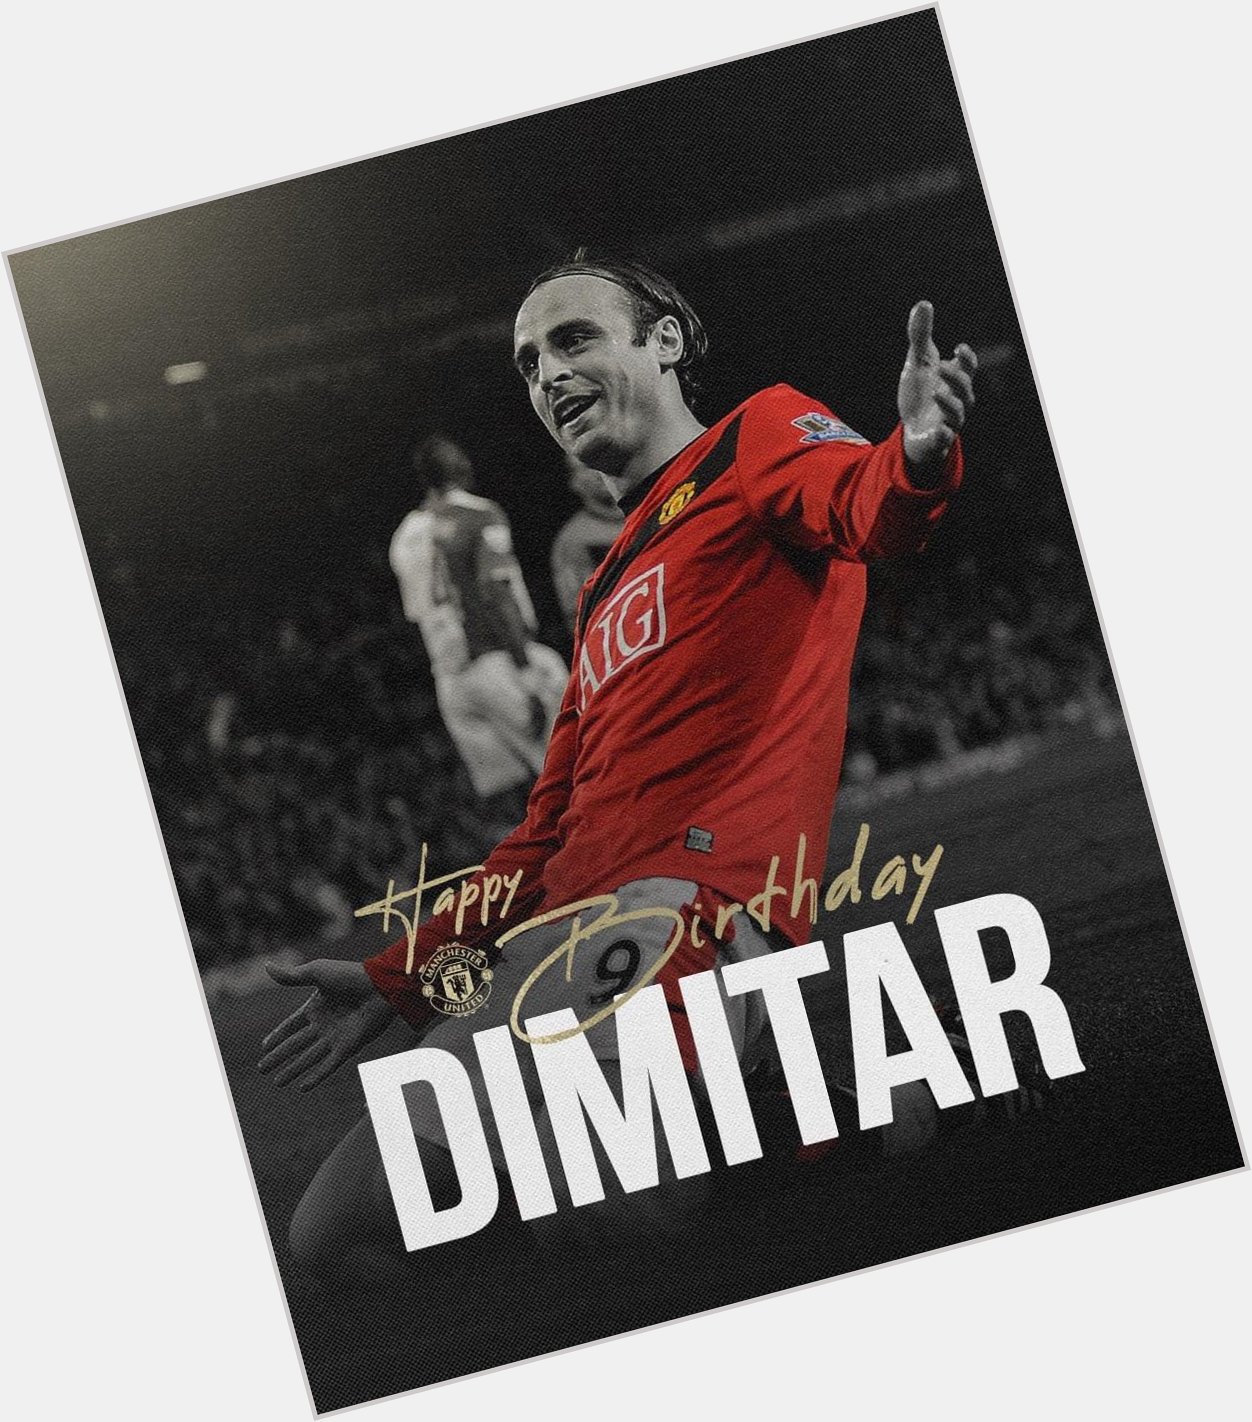 Manchester United !! Wishing Dimitar Berbatov a very happy 4  0  th birthday! 